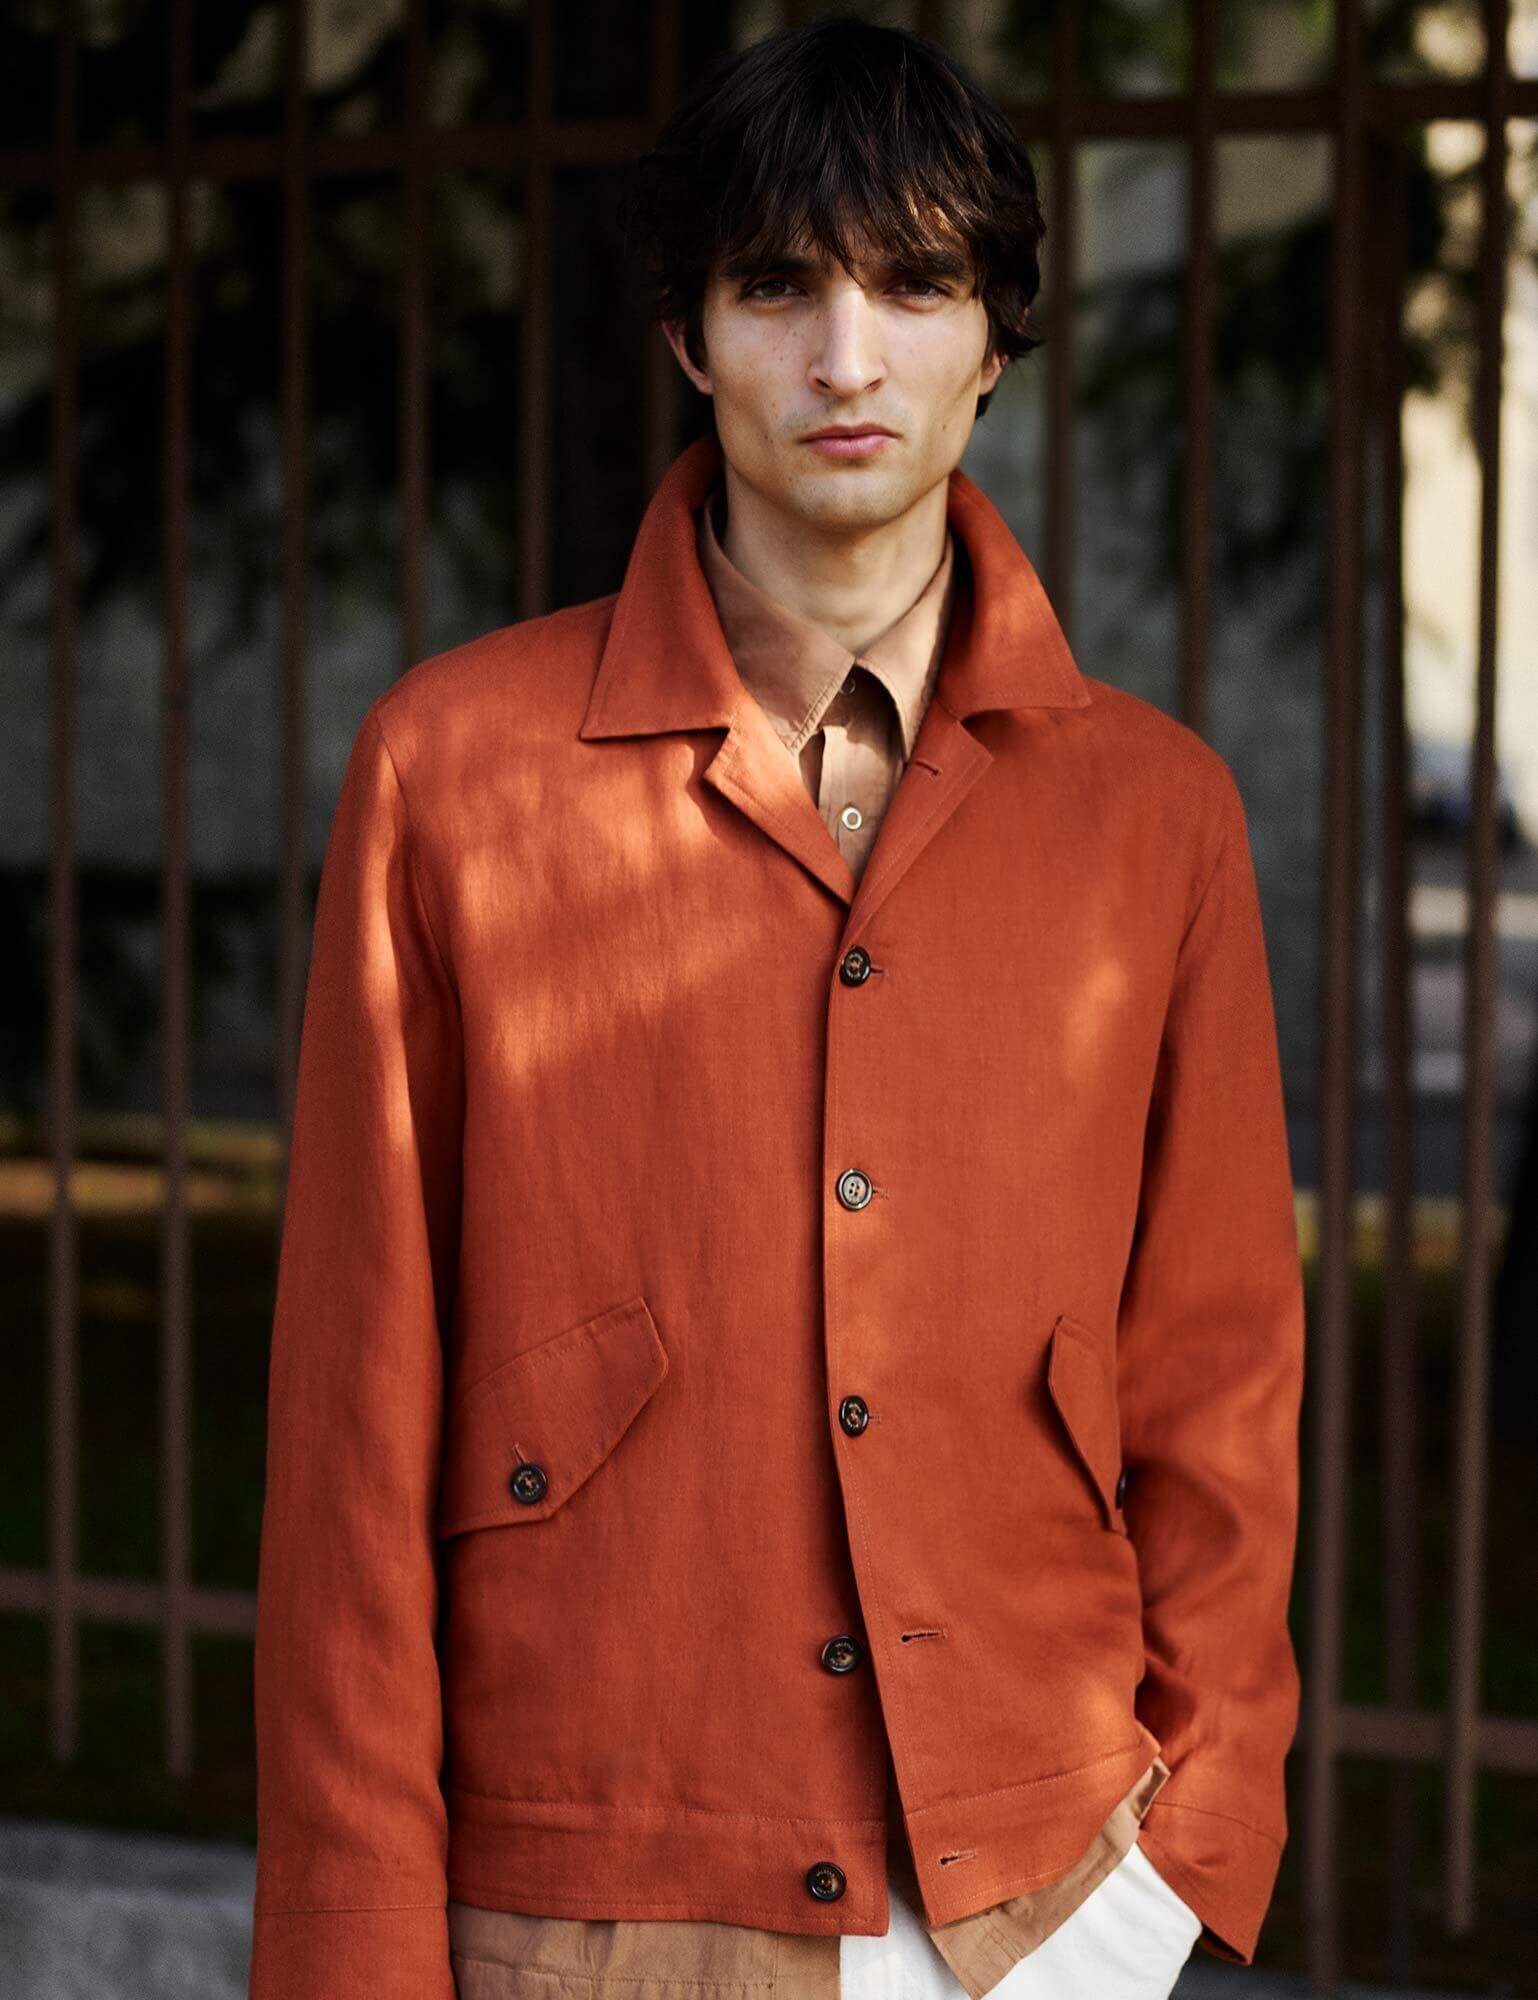 A model wearing an orange jacket from Valstar Milano